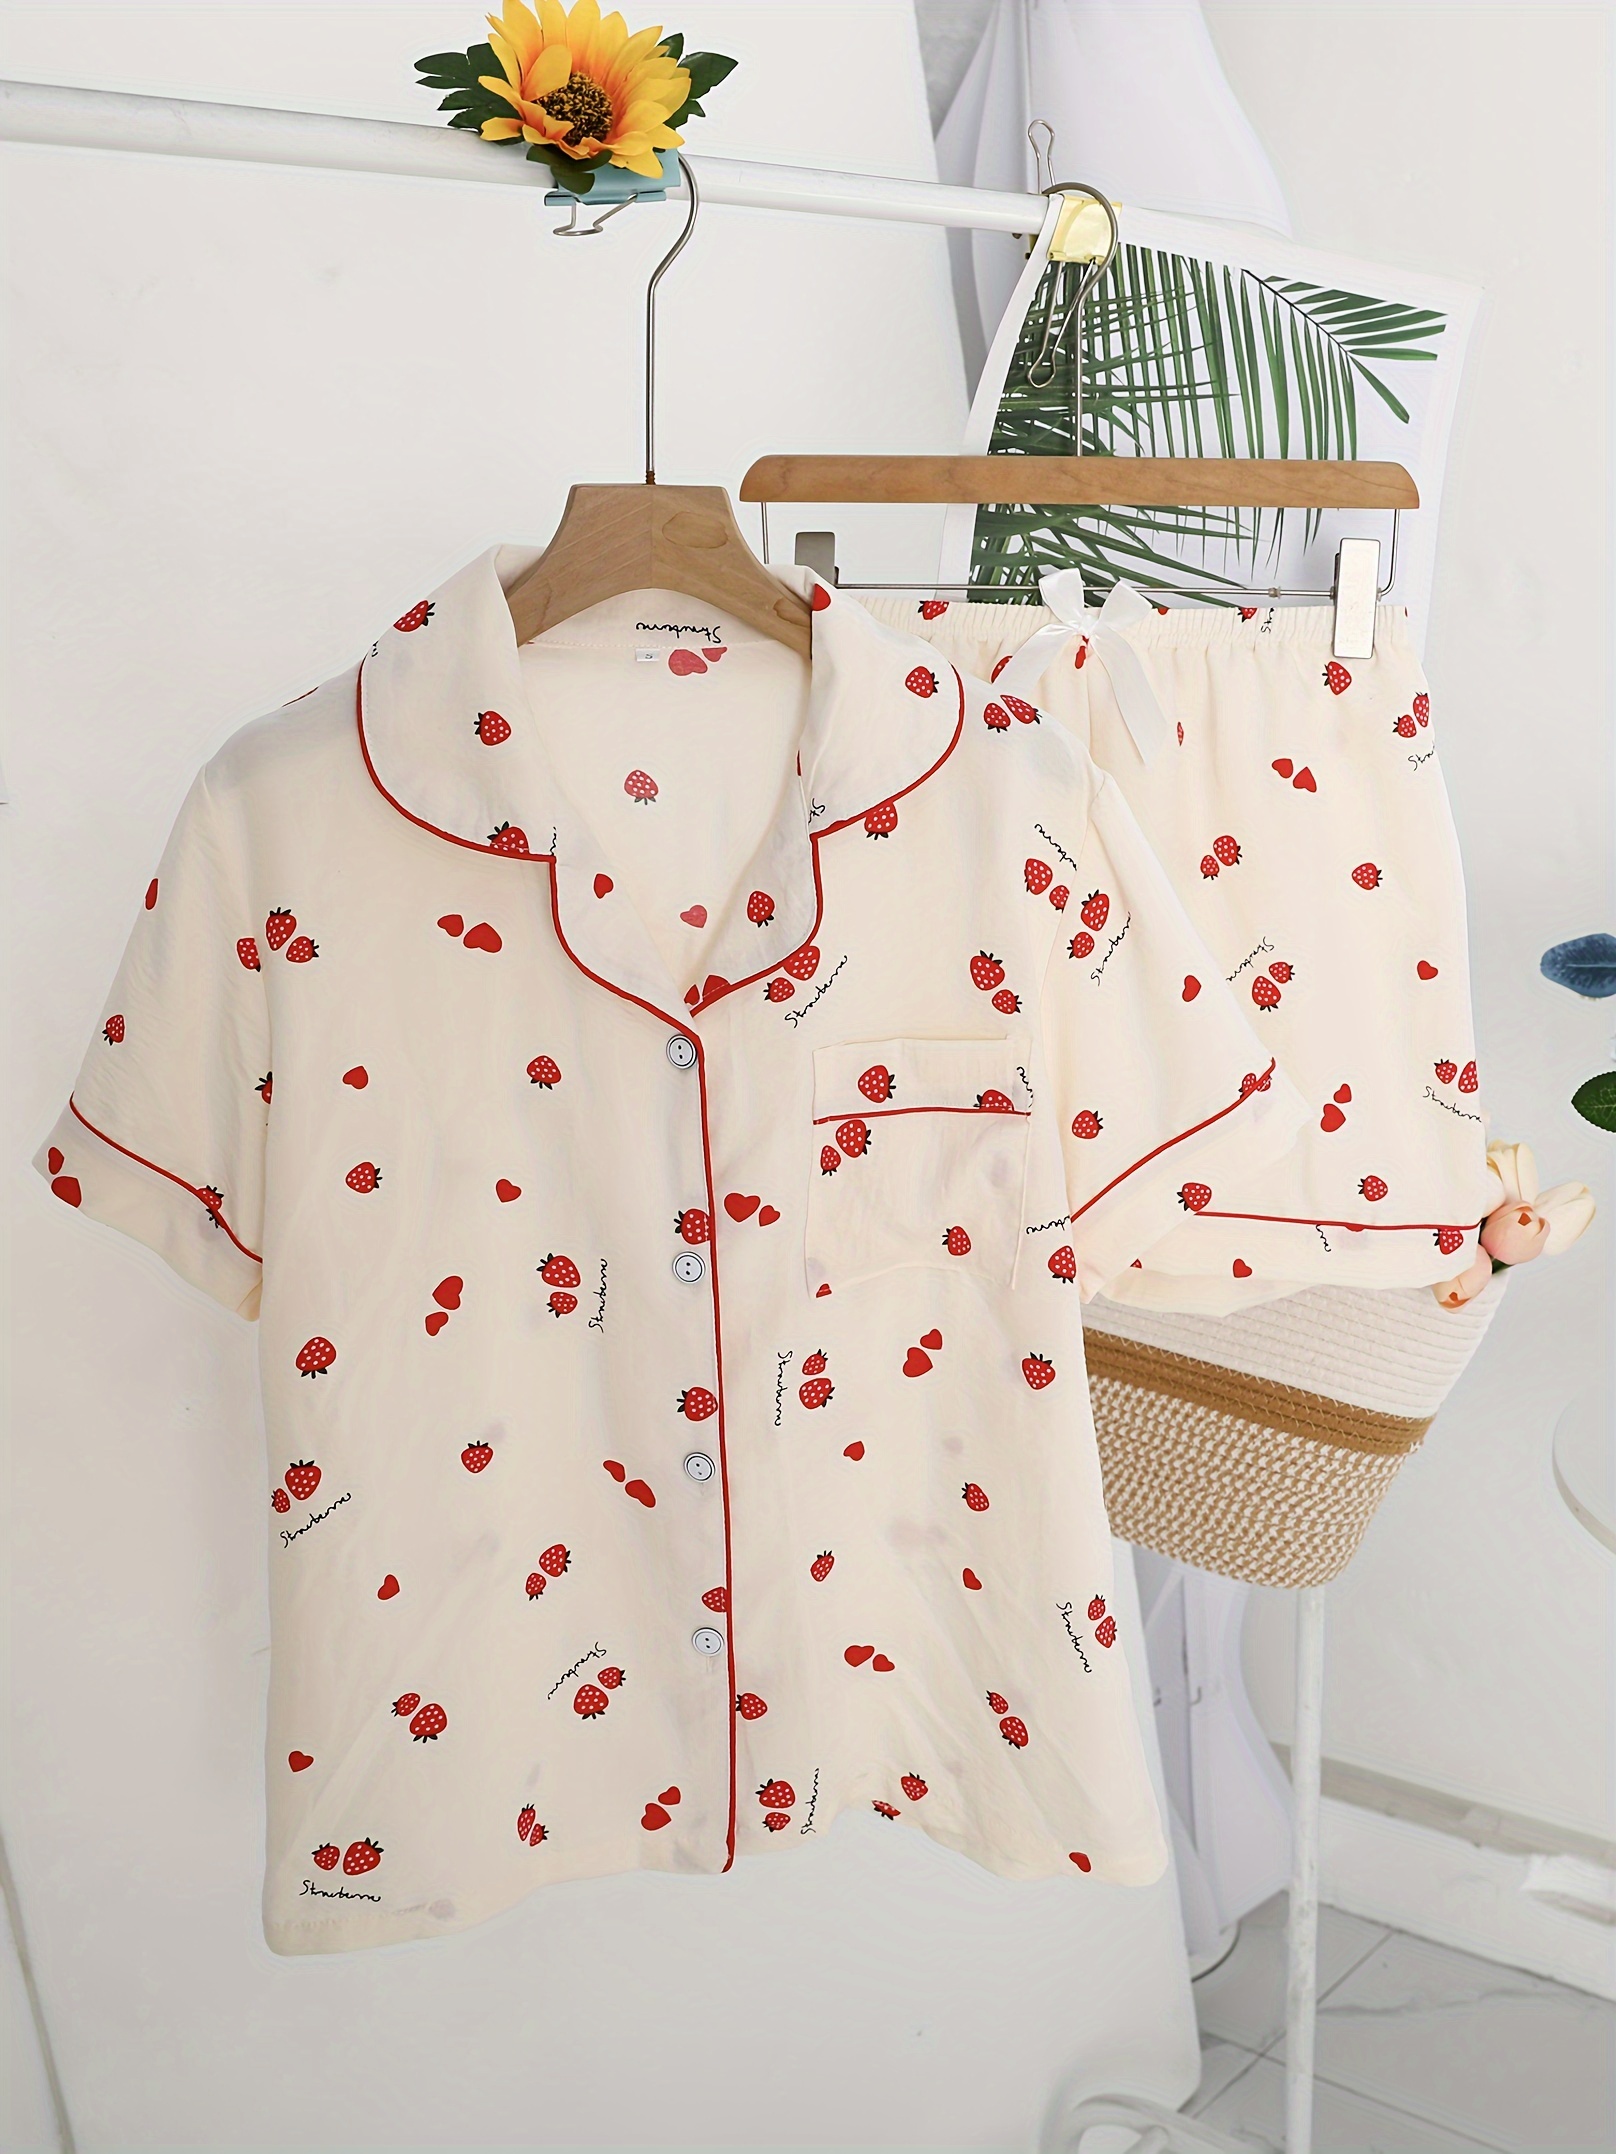 Cute Moon Print Pajamas, Comfy Cami Top & Elastic Waistband Shorts, Women's  Loungewear & Sleepwear